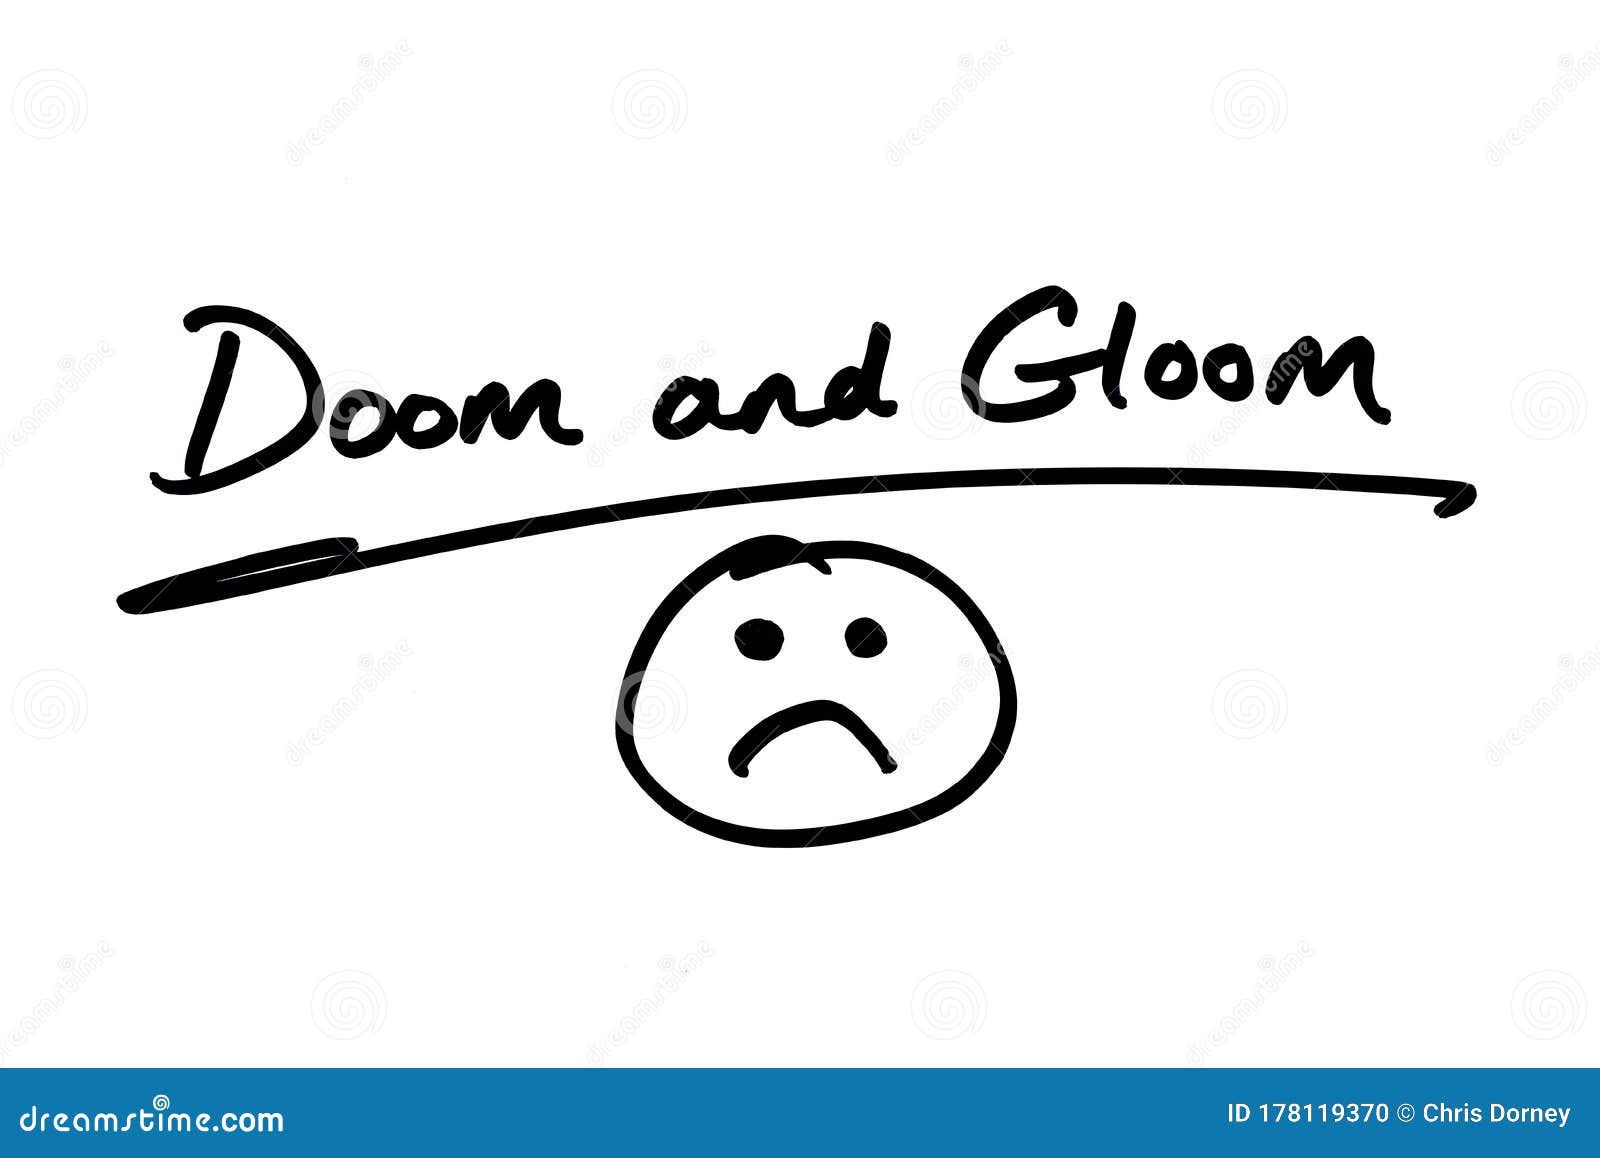 doom and gloom